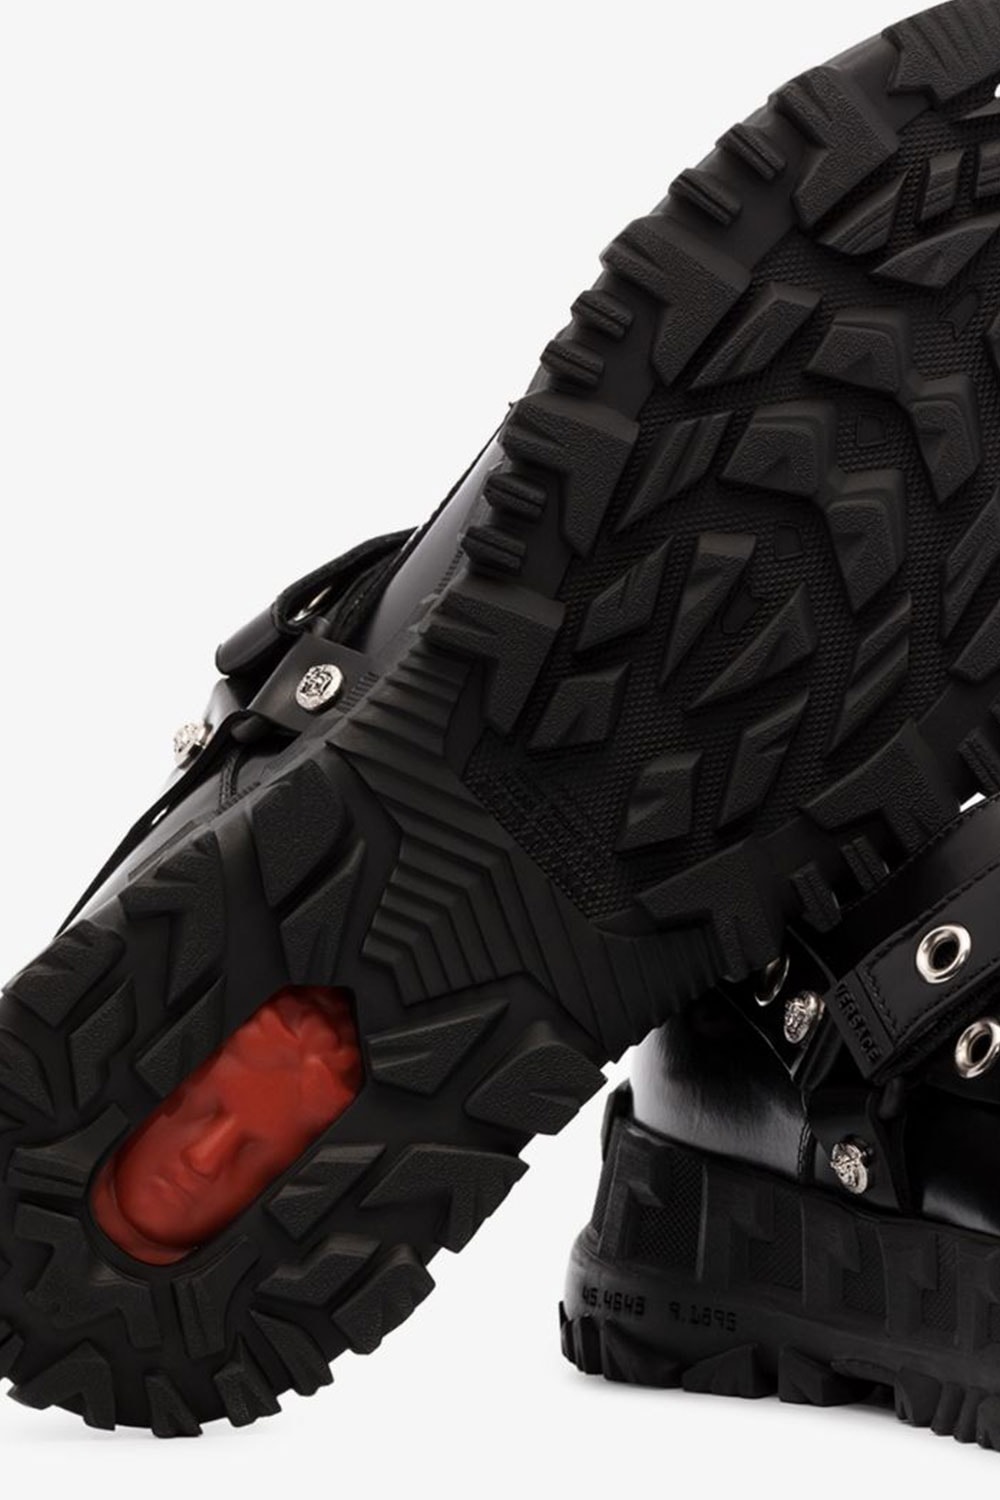 Versace Black BDSM Straps Leather Derby Shoes Drop Submits Dominates Studs Browns Fashion punk rock fetish